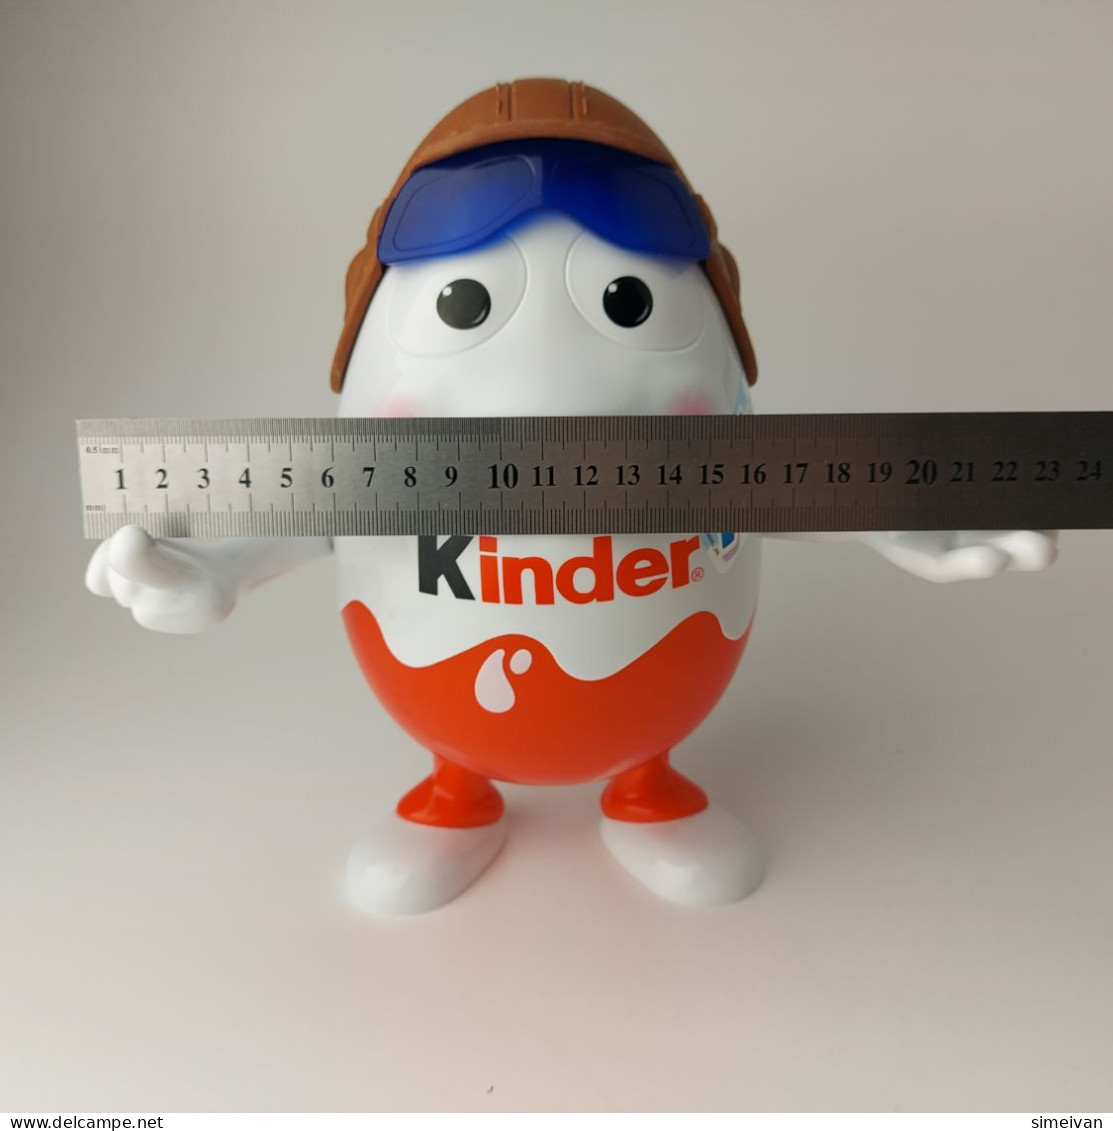 Kinder Surprise Plastic Mascot Toy Figure Storage Container Display 24cm #5456